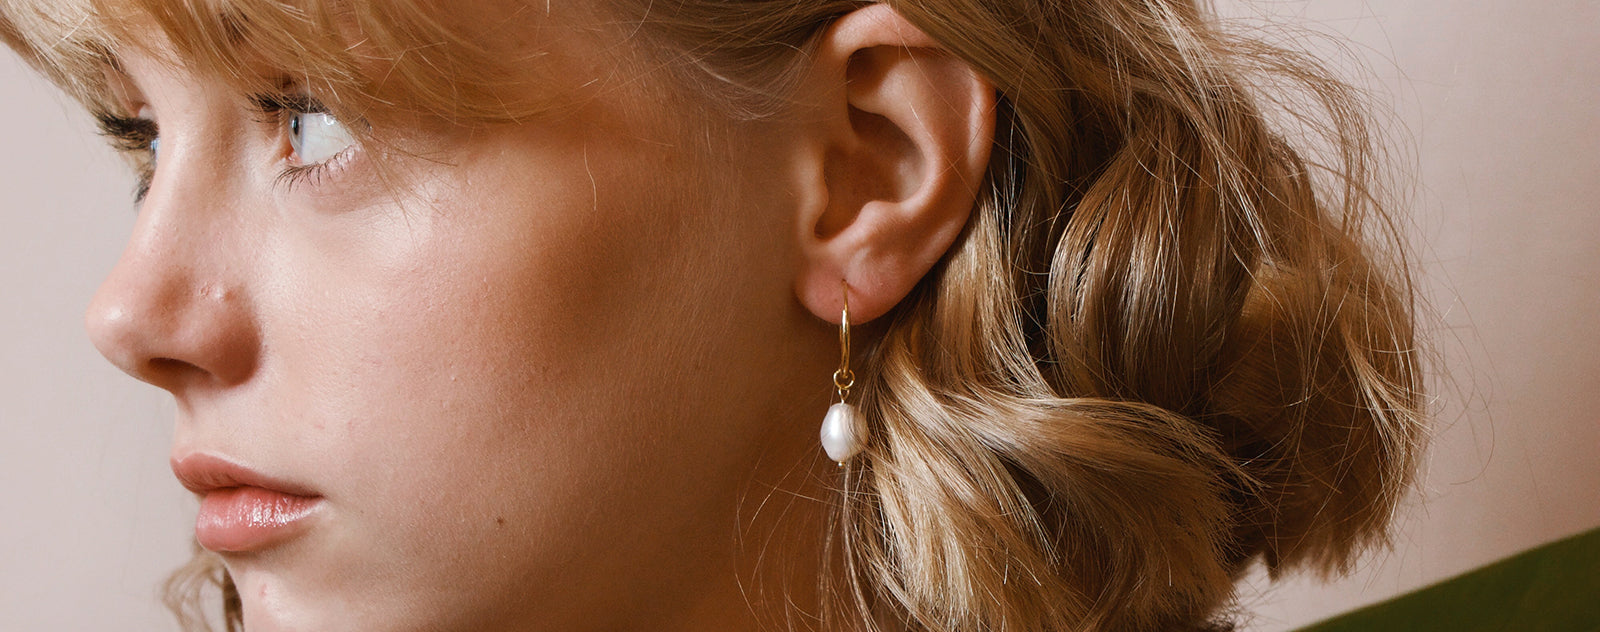 Femme avec boucles d'oreilles perle de culture joli regard